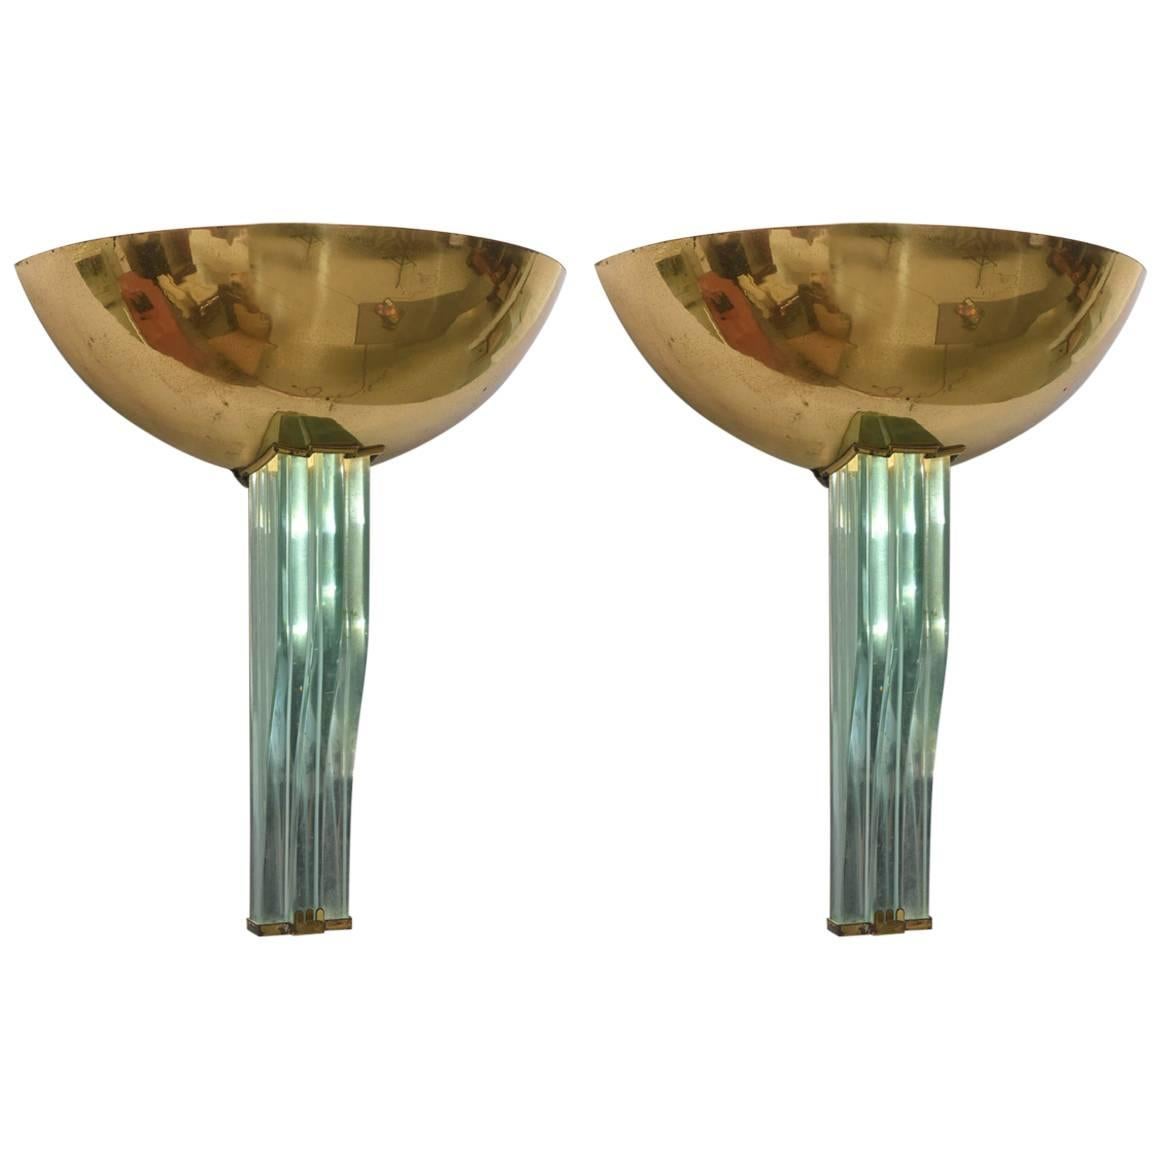 Pair of Italian Modern Brass and Glass Wall Lights, Pietro Chiesa/Fontana Arte For Sale